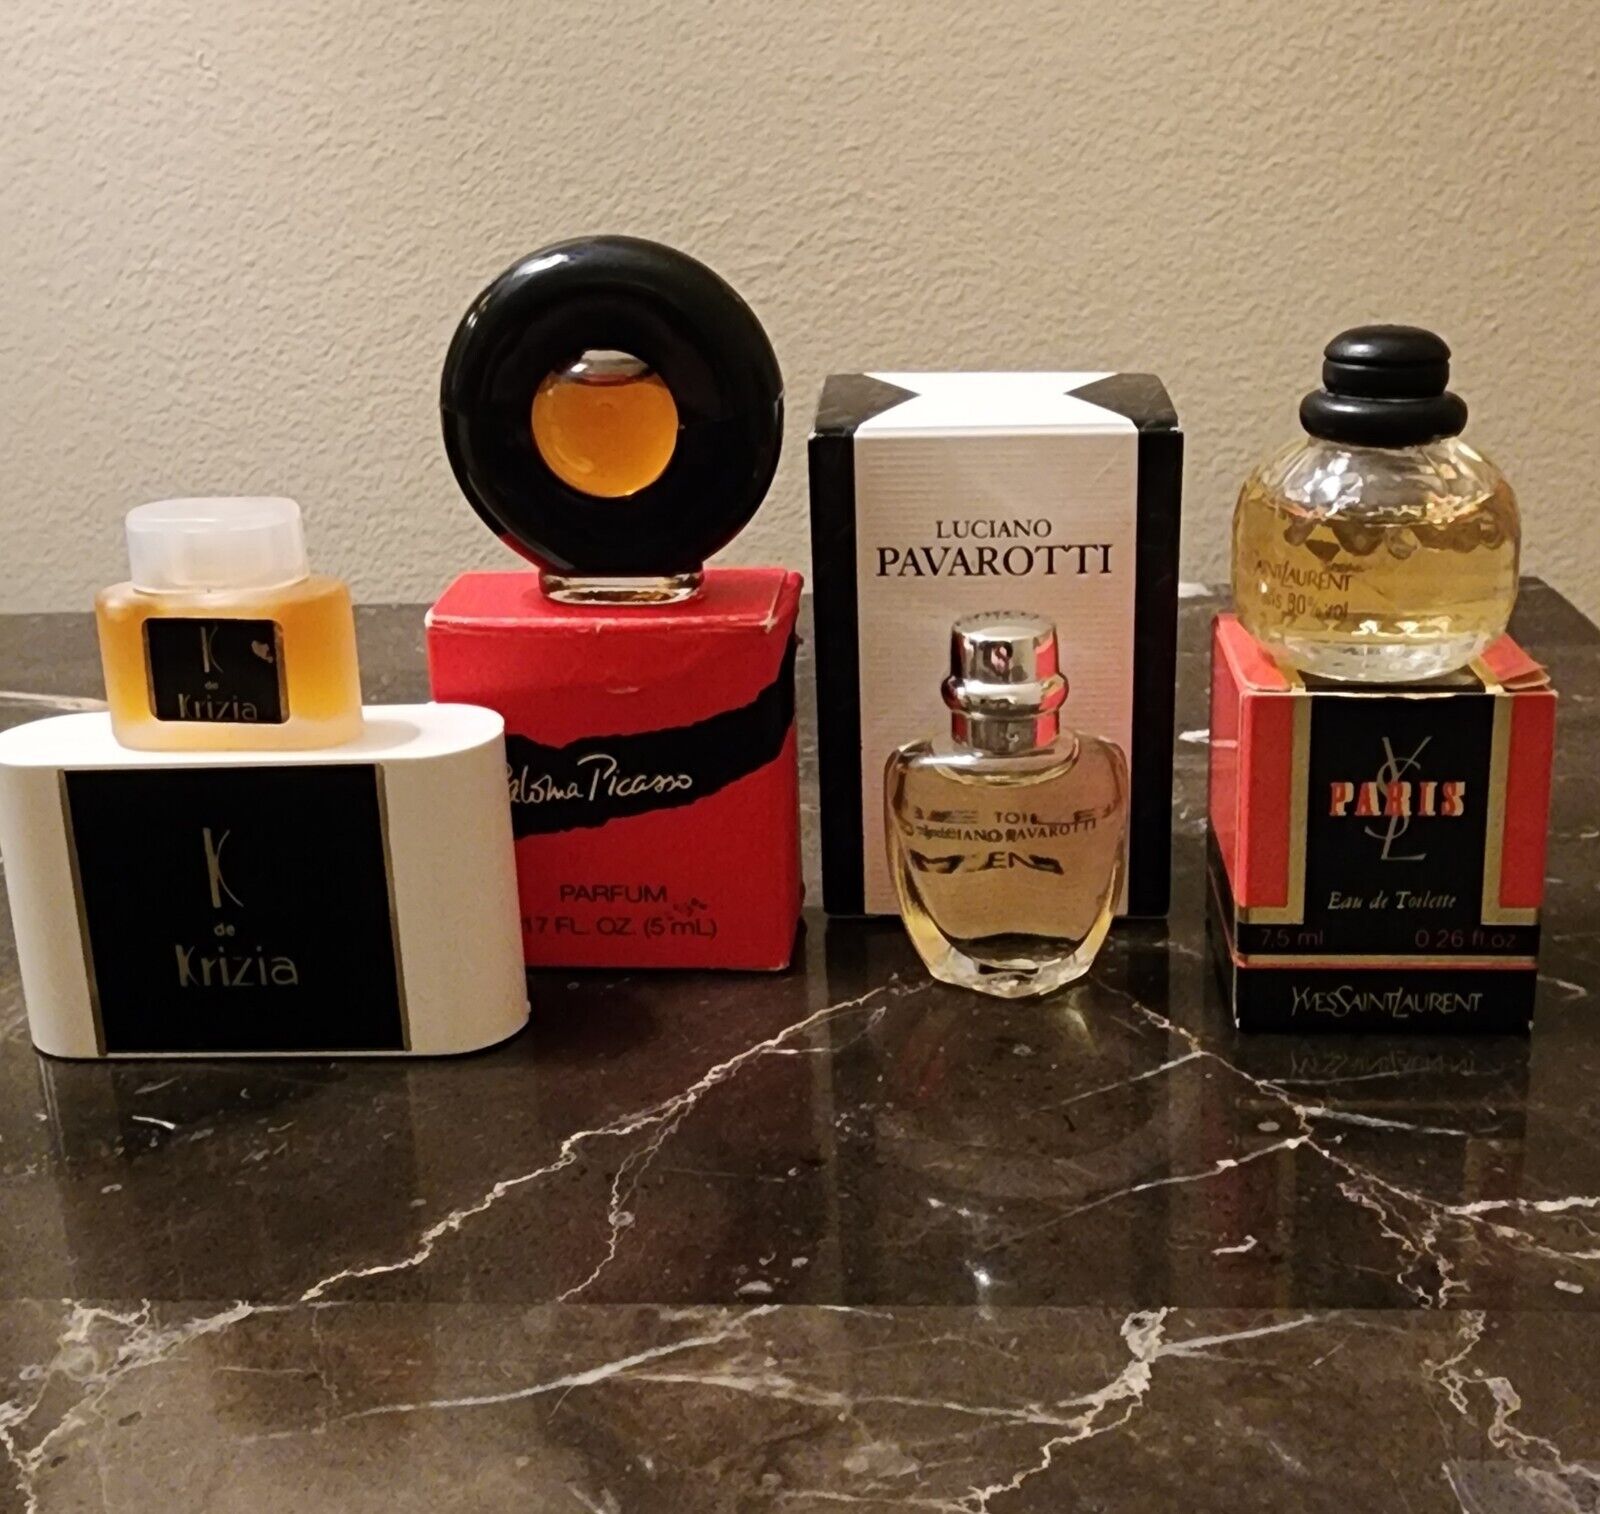 Vintage Miniature Perfumes Bottles with Original Packaging Set of 4 $30.00